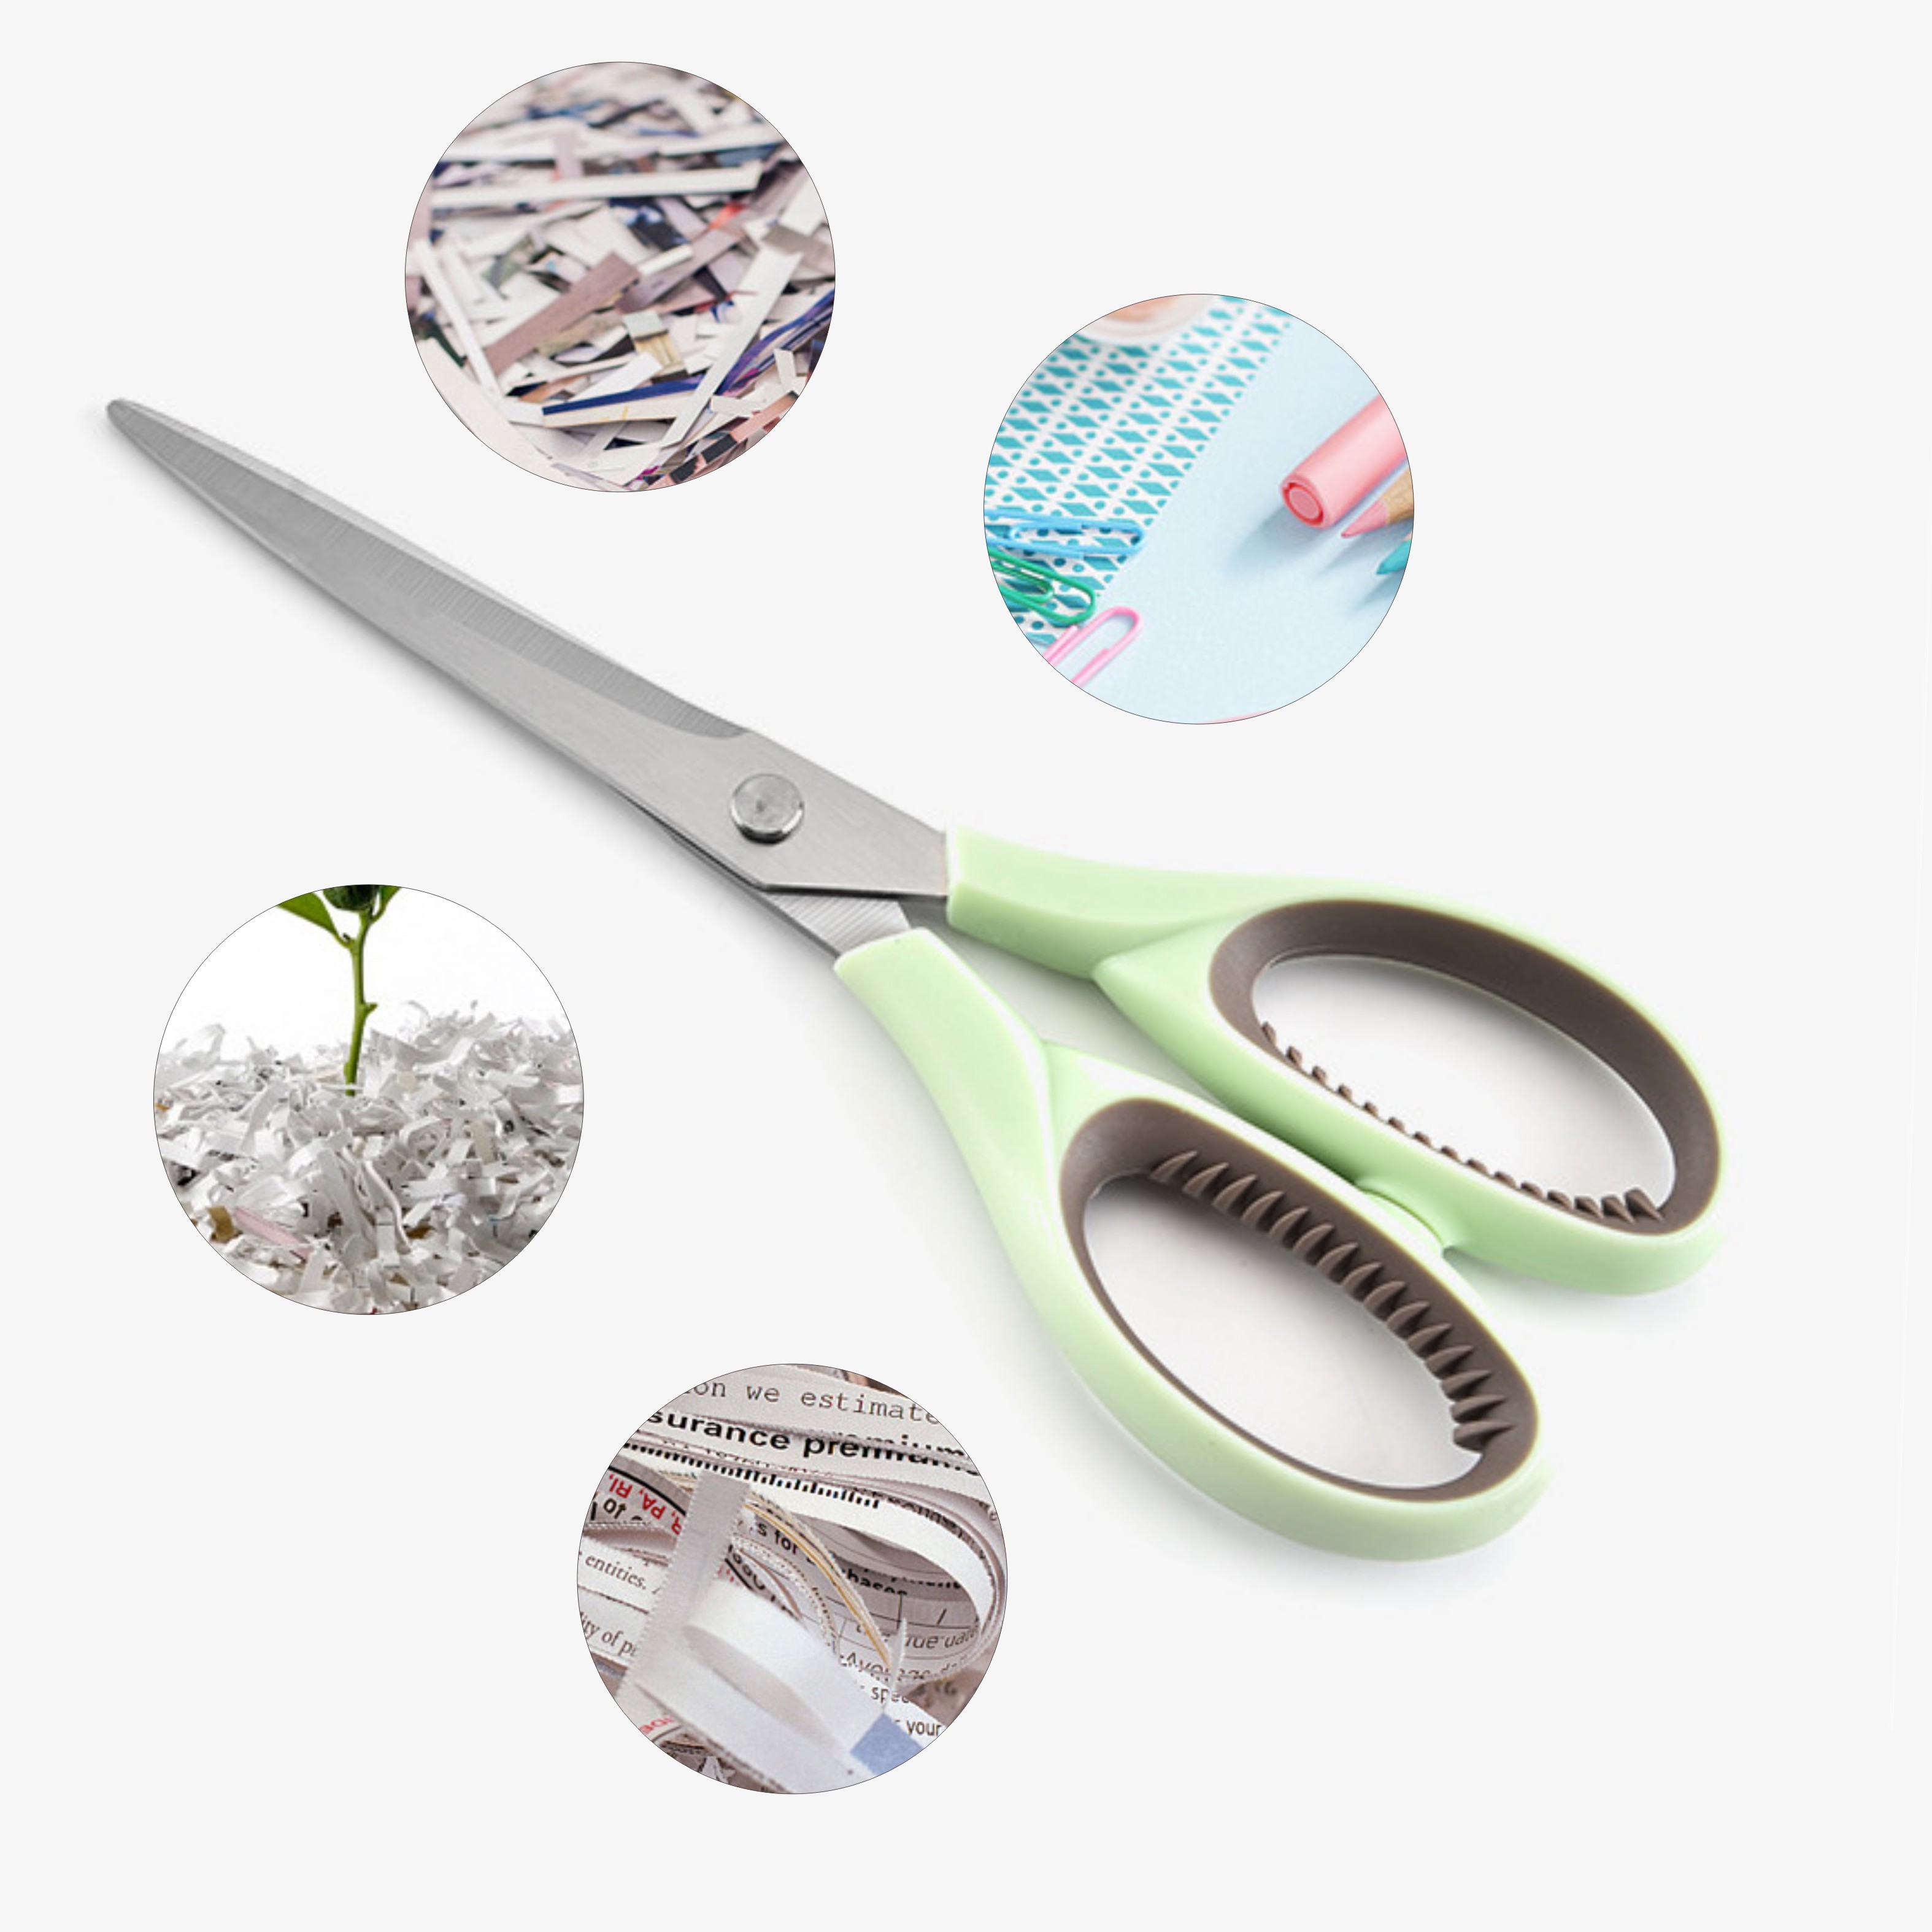 2019 new product home/student/school/office/household Scissor,Shear Multi Function Scissor